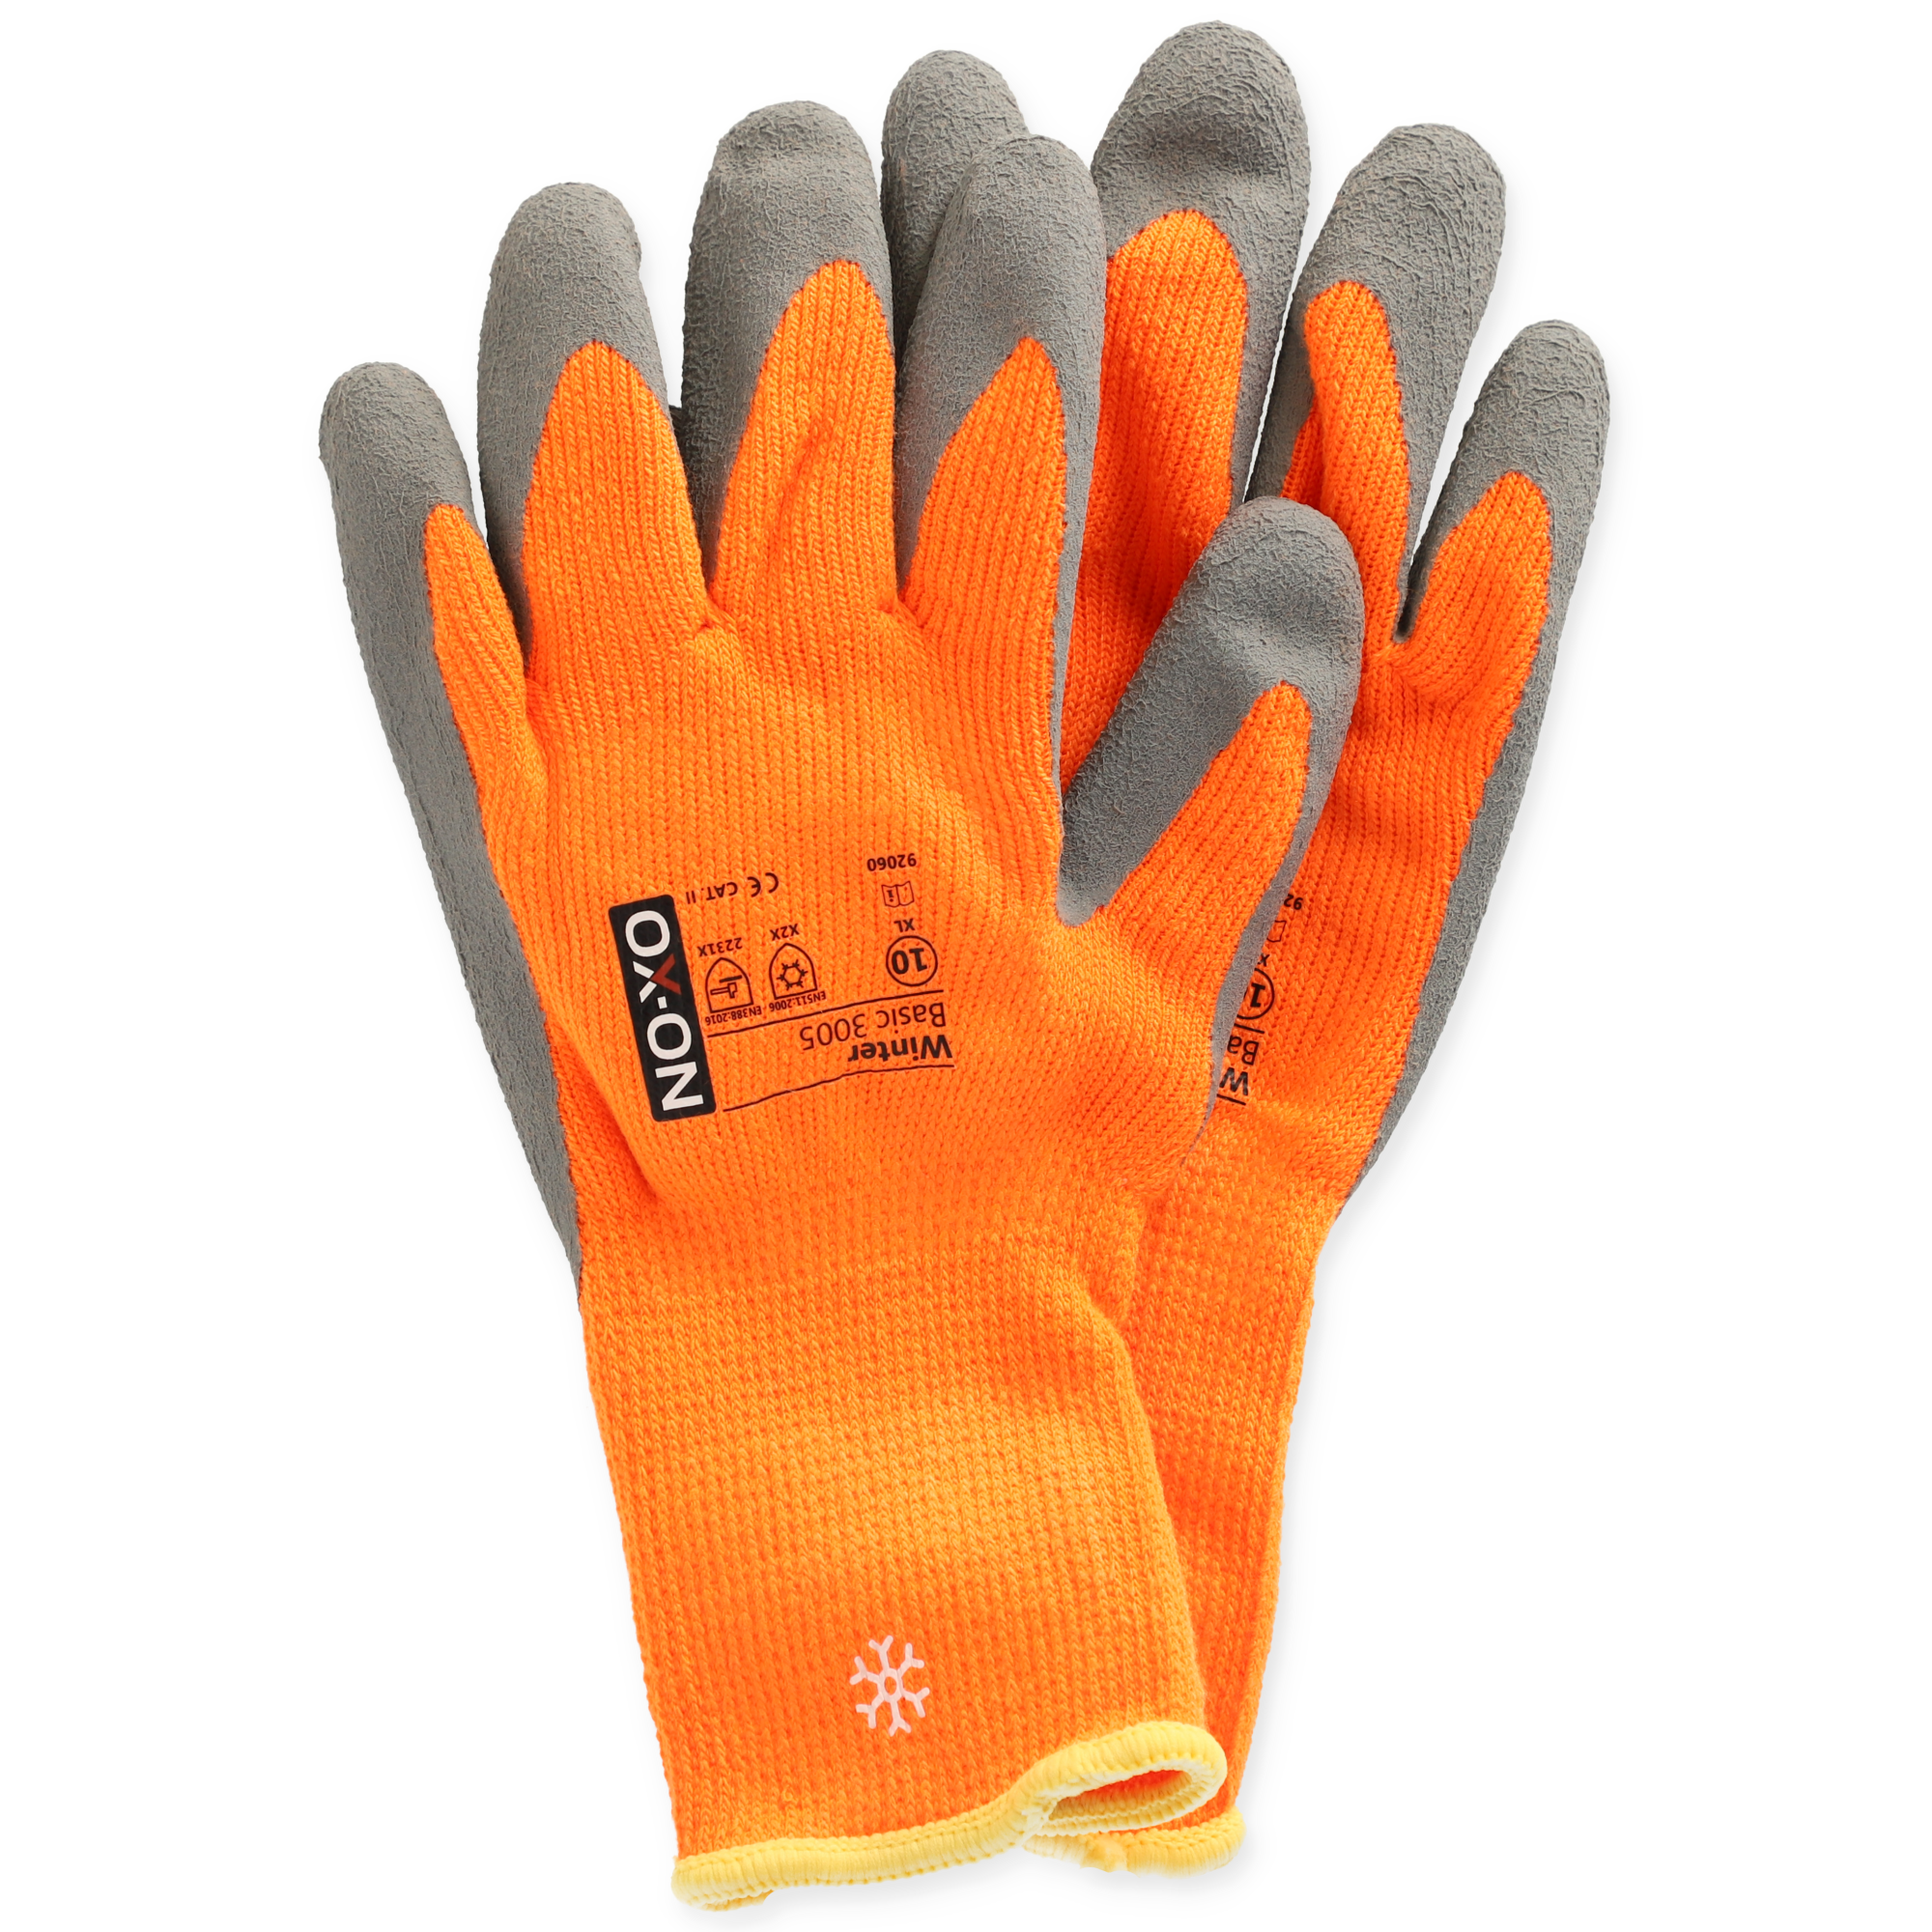 Handschuhe 'Basic 3005' orange Gr. 11 + product picture